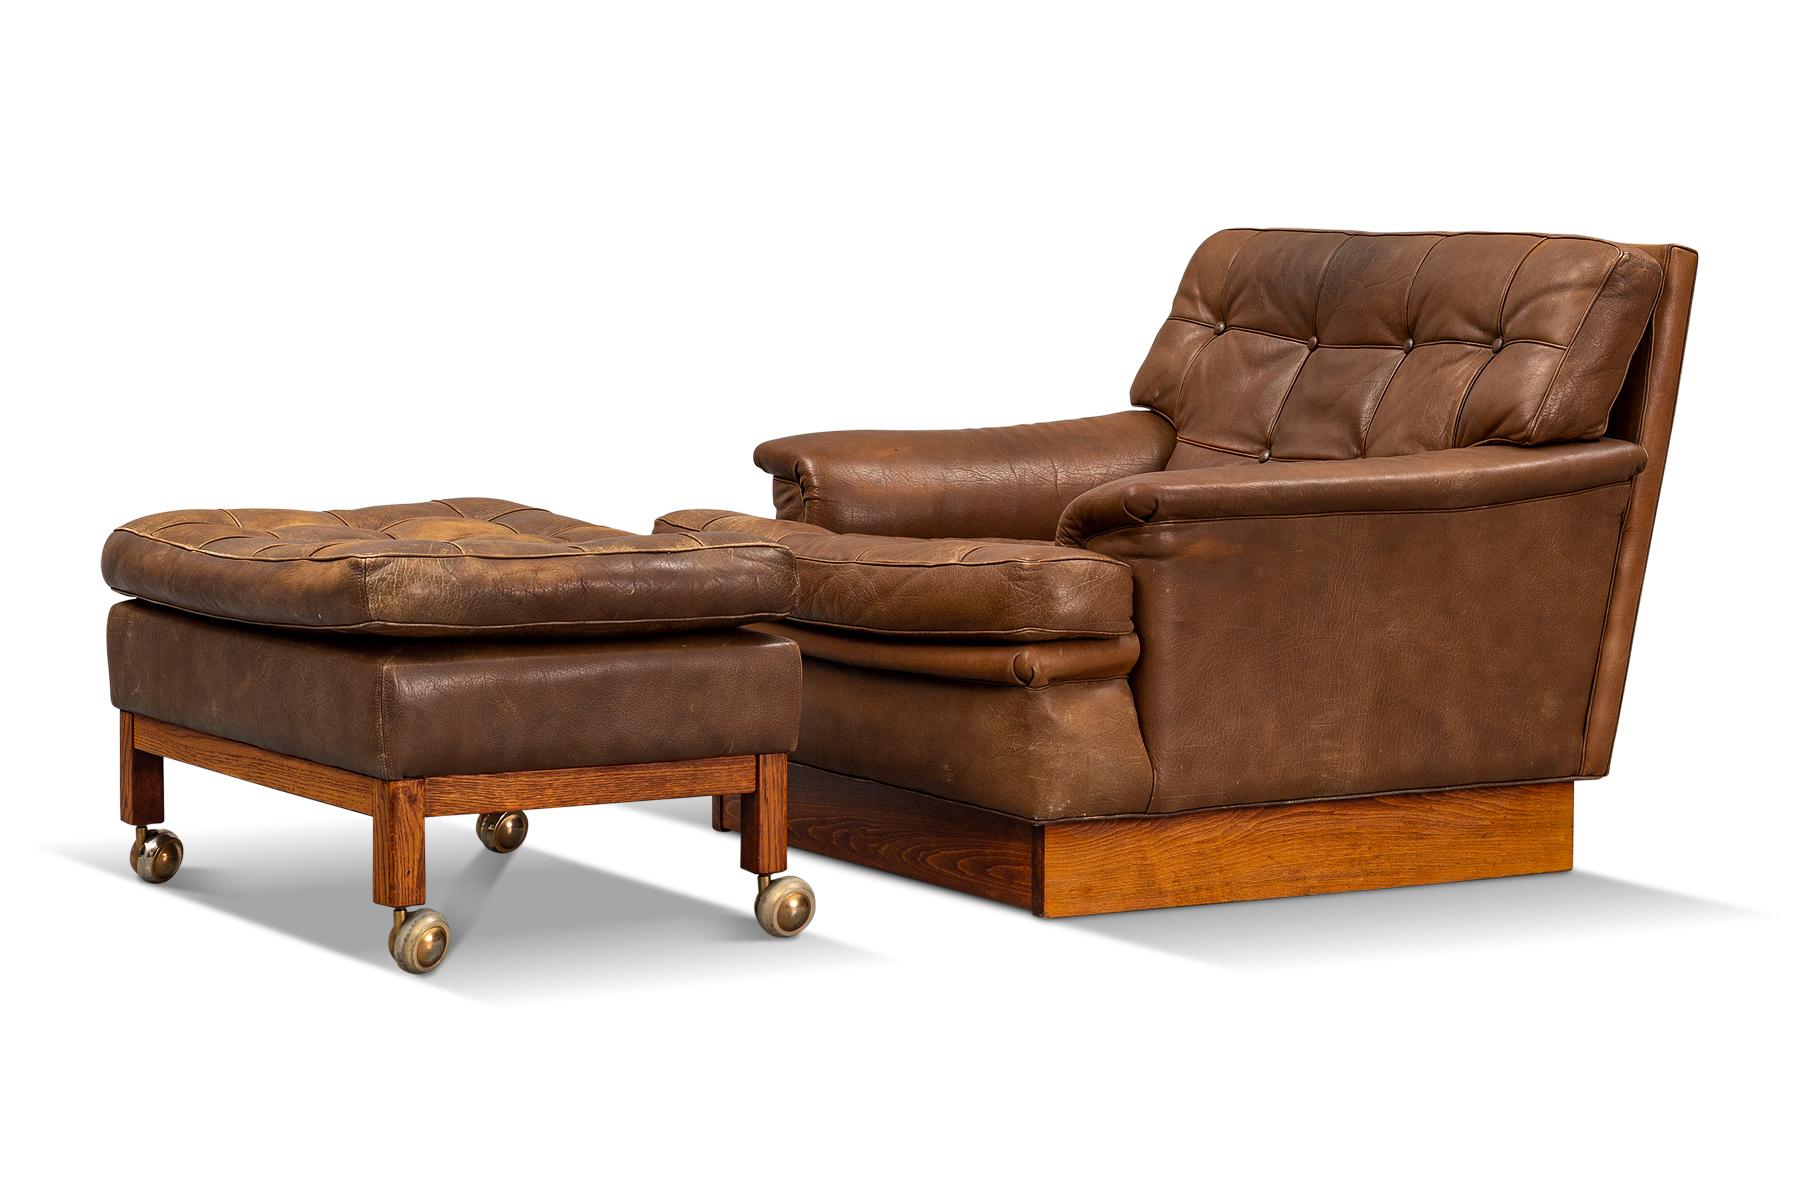 Arne Norell fauteuil de salon Saturn + repose-pieds en cuir brun Excellent état - En vente à Berkeley, CA